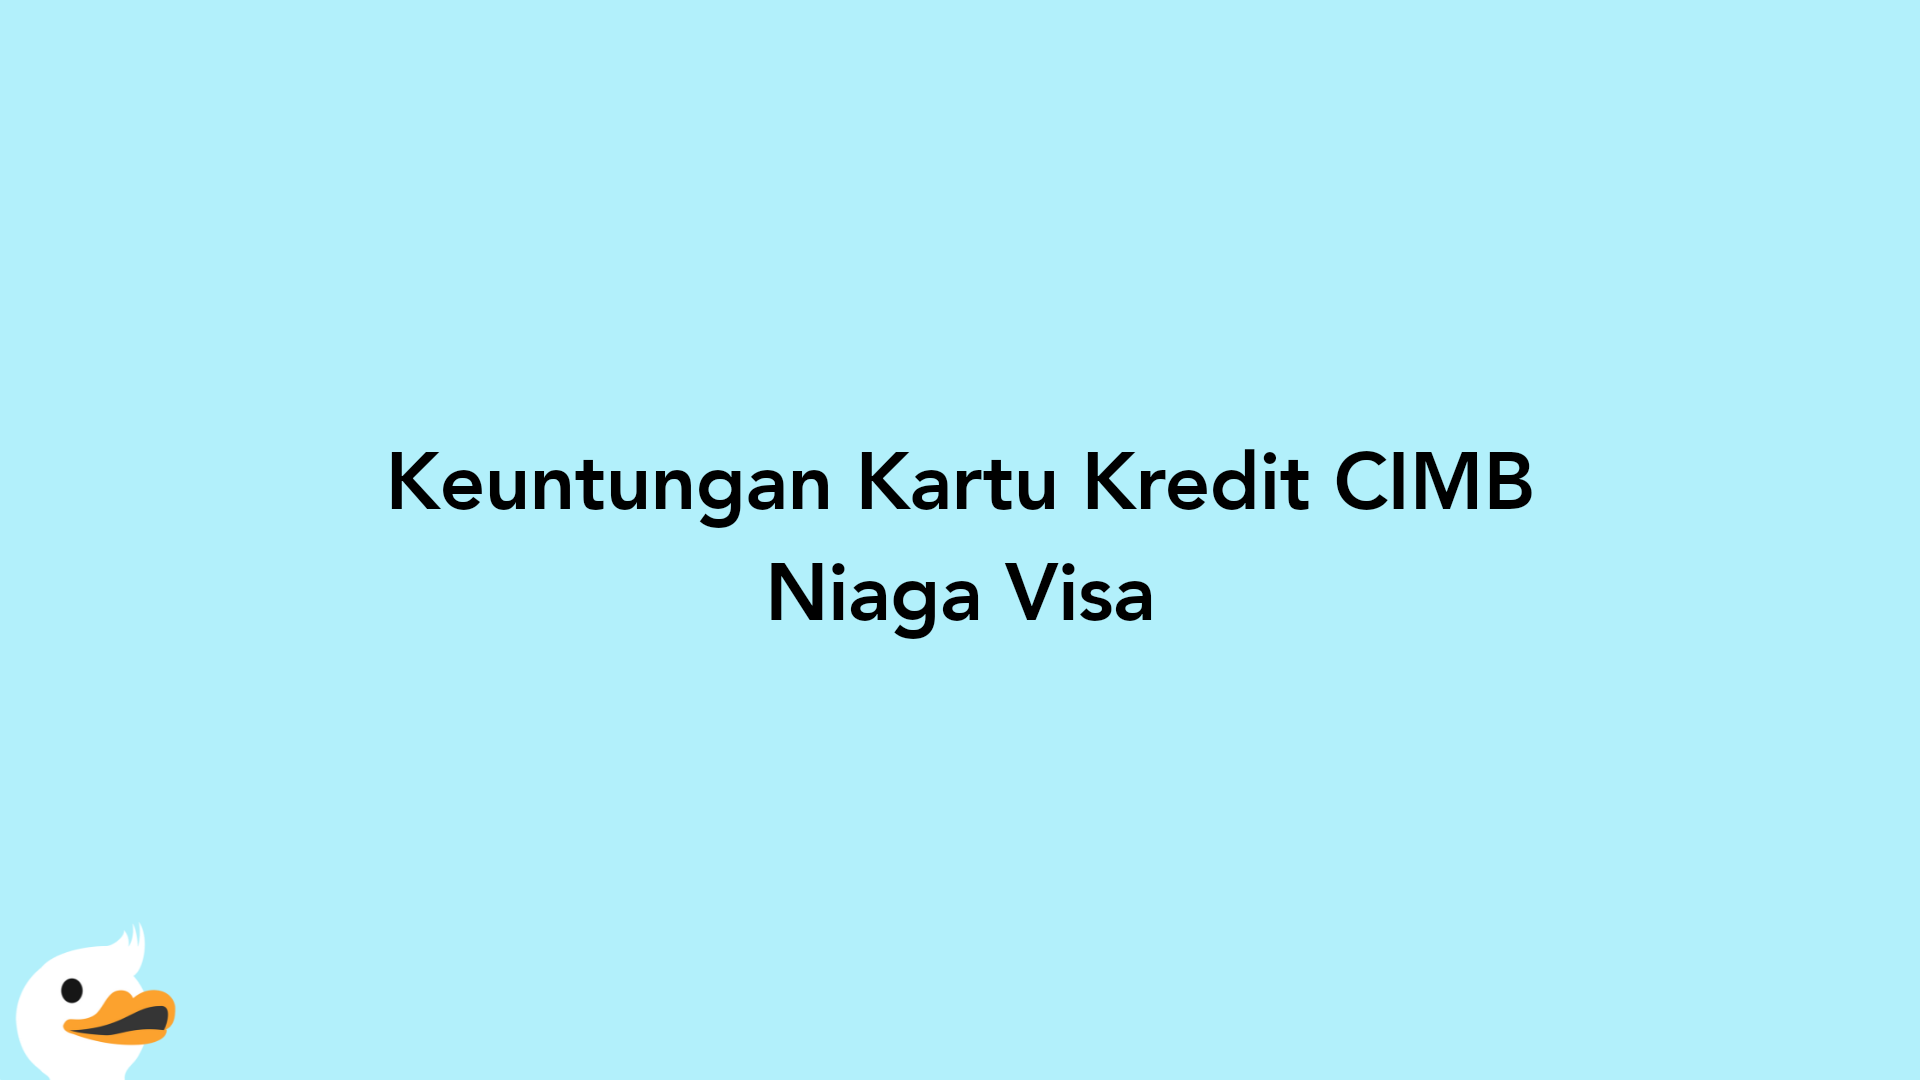 Keuntungan Kartu Kredit CIMB Niaga Visa